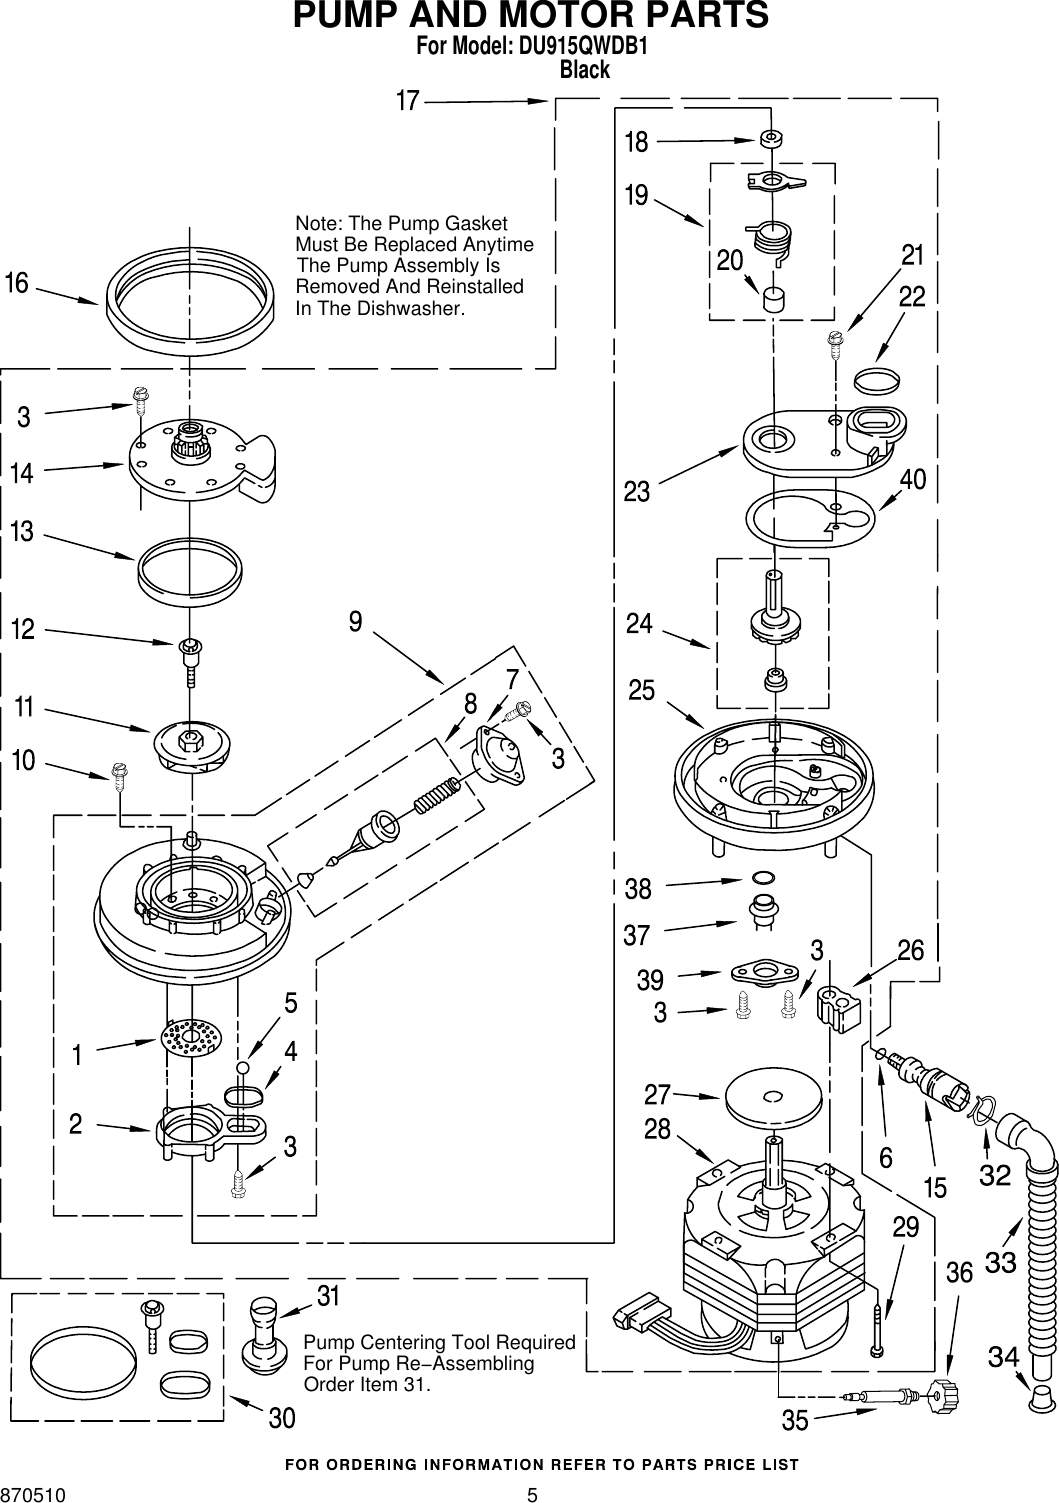 Page 5 of 8 - Whirlpool Whirlpool-Whirlpool-Dishwasher-Du915Qwdb1-Users-Manual-  Whirlpool-whirlpool-dishwasher-du915qwdb1-users-manual